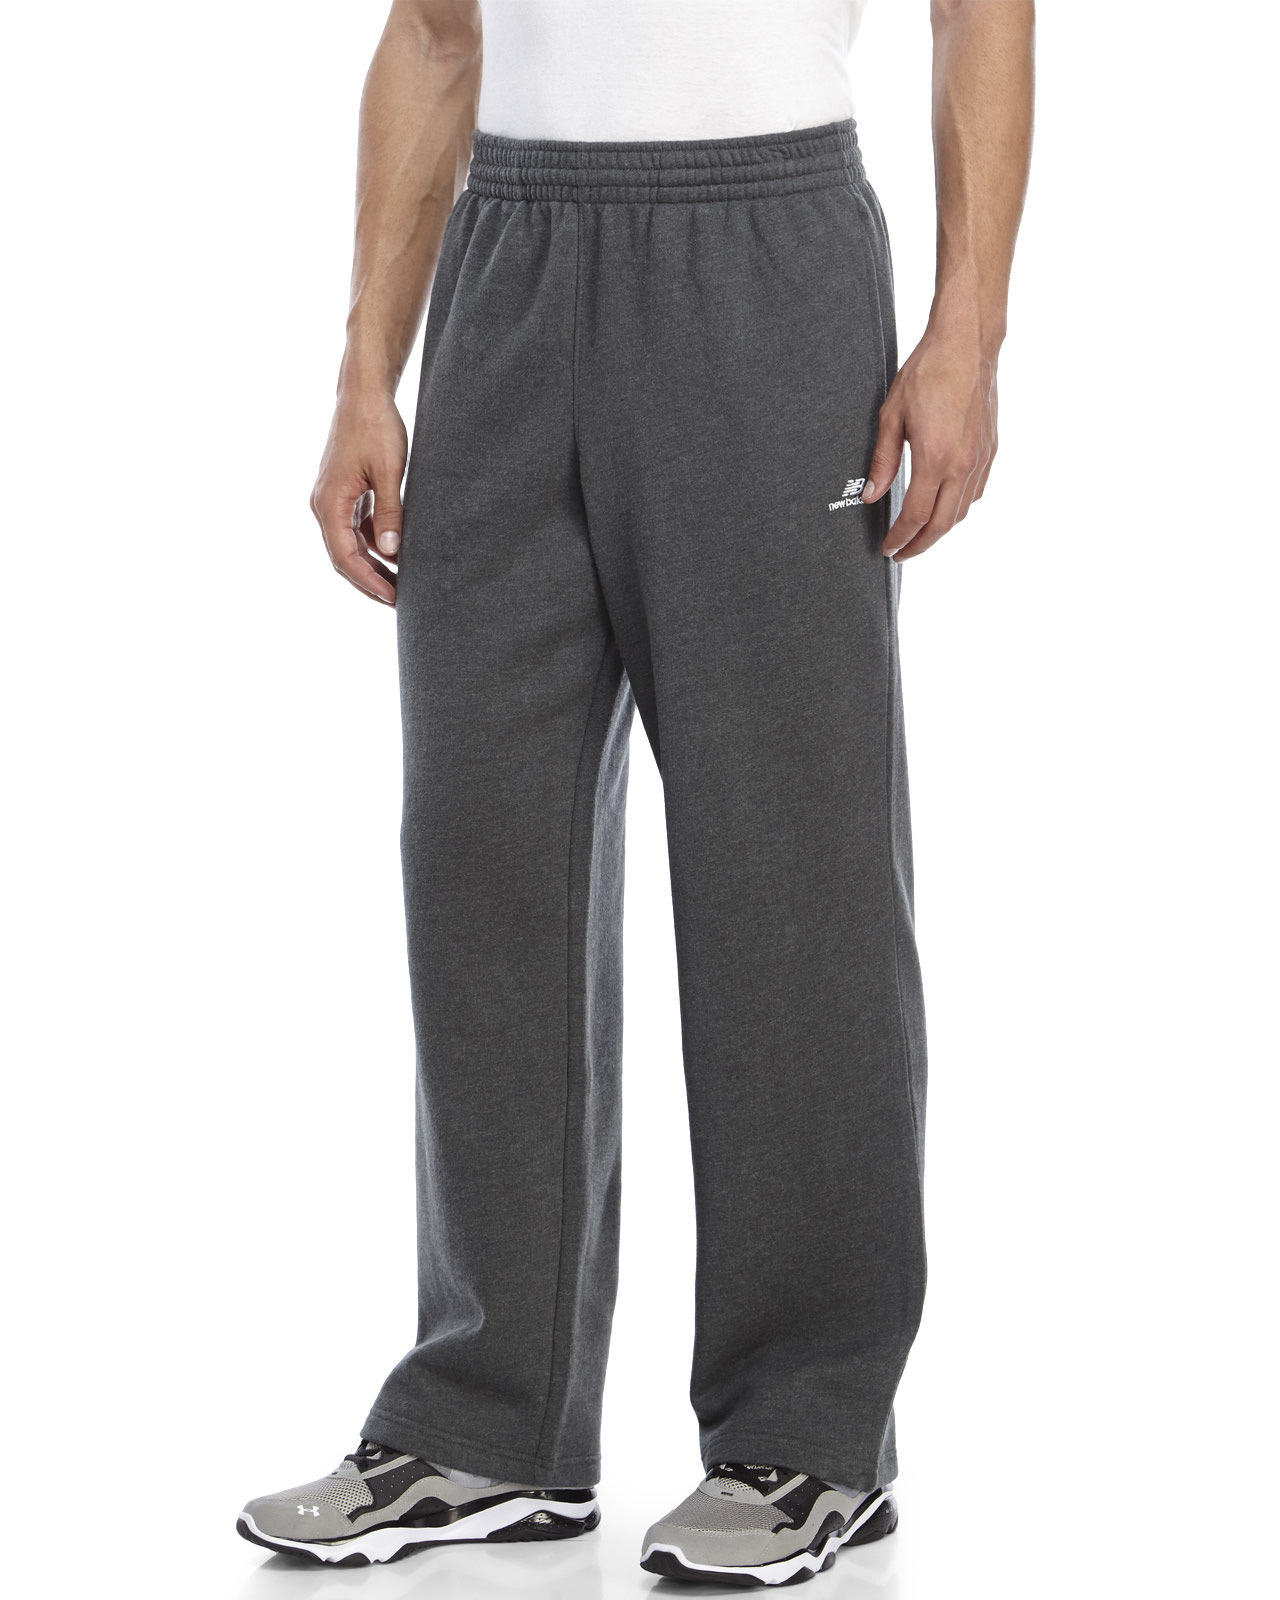 Lyst - New balance Essential Fleece Sweatpants in Gray for Men